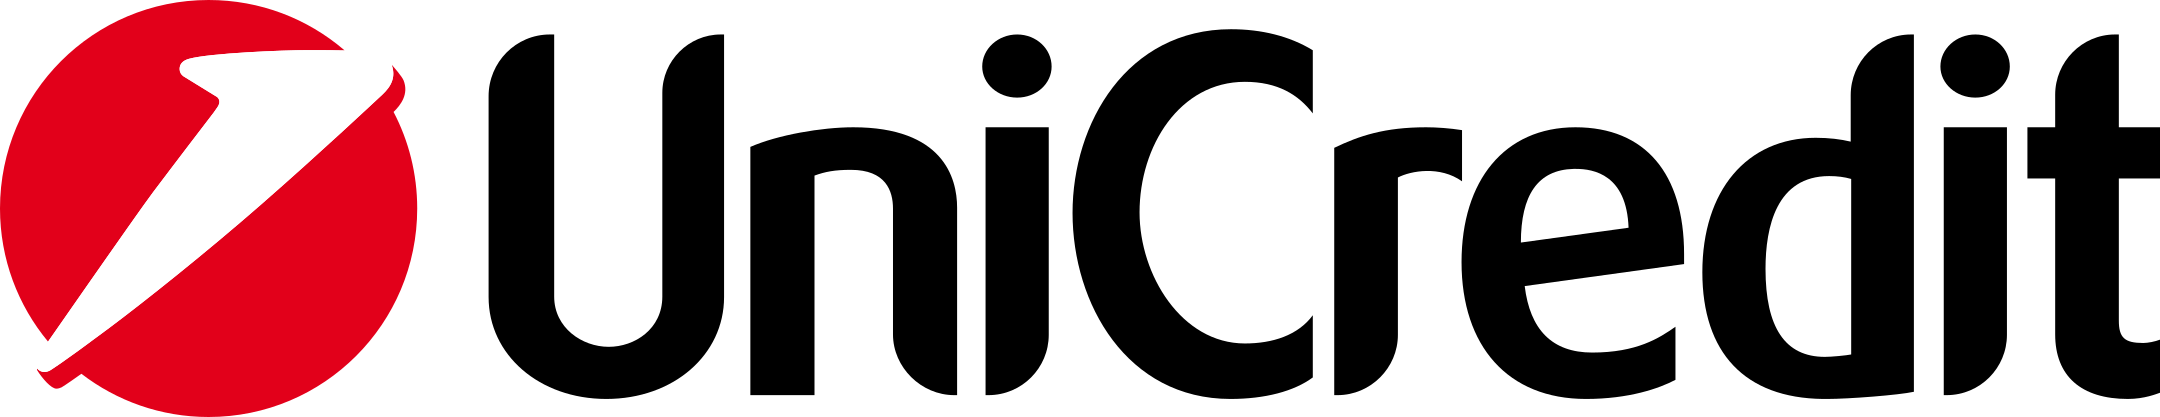 unicredit logo 1 - UniCredit Logo